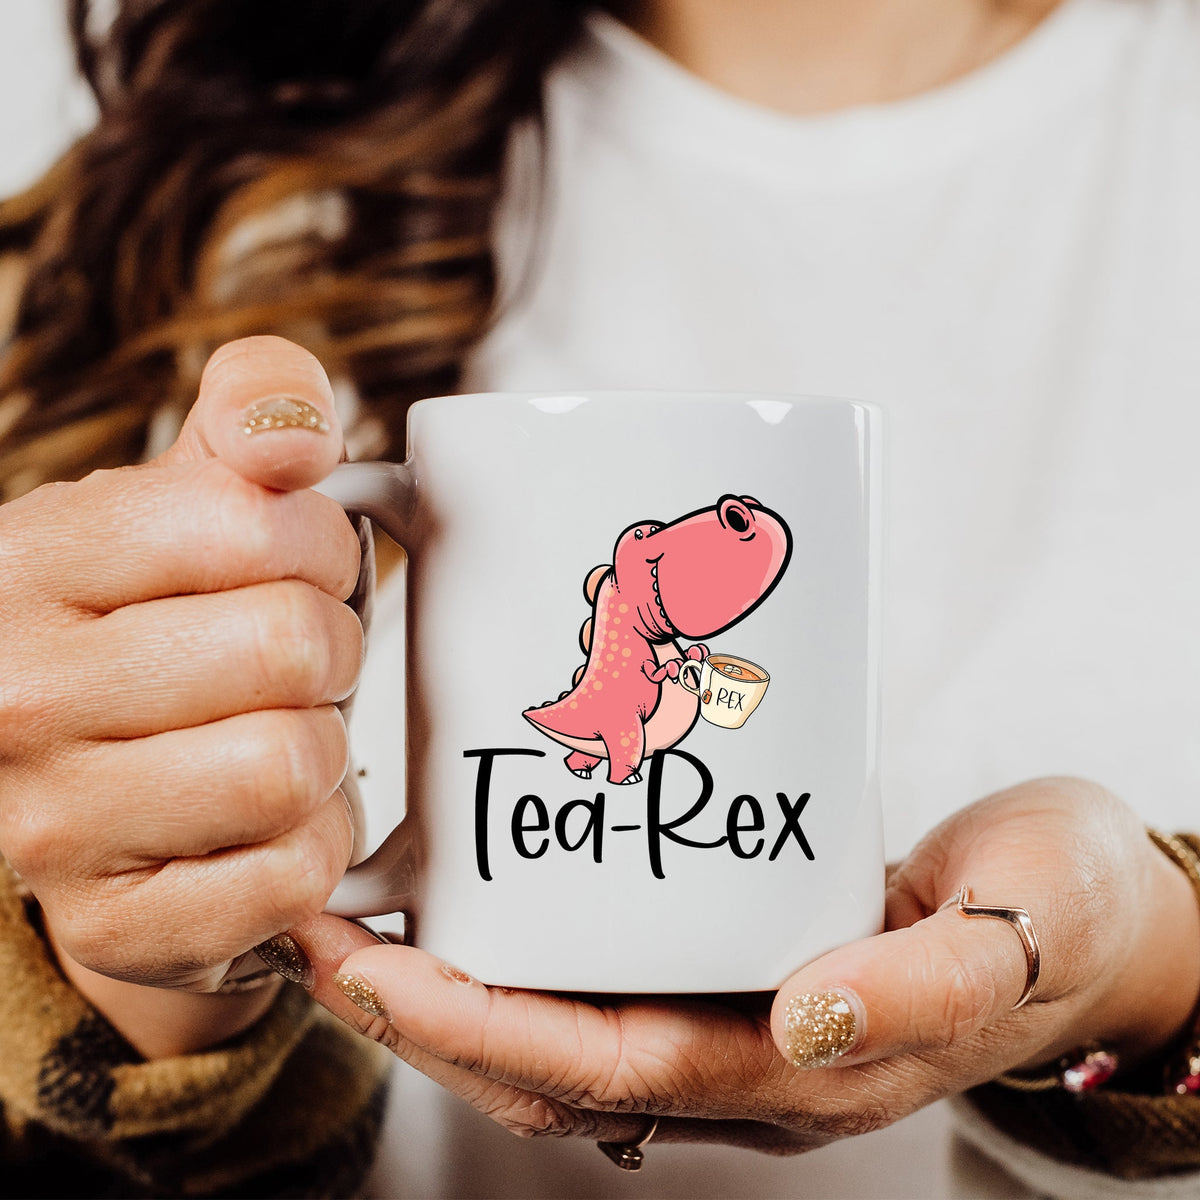 Tea-Rex - Mug